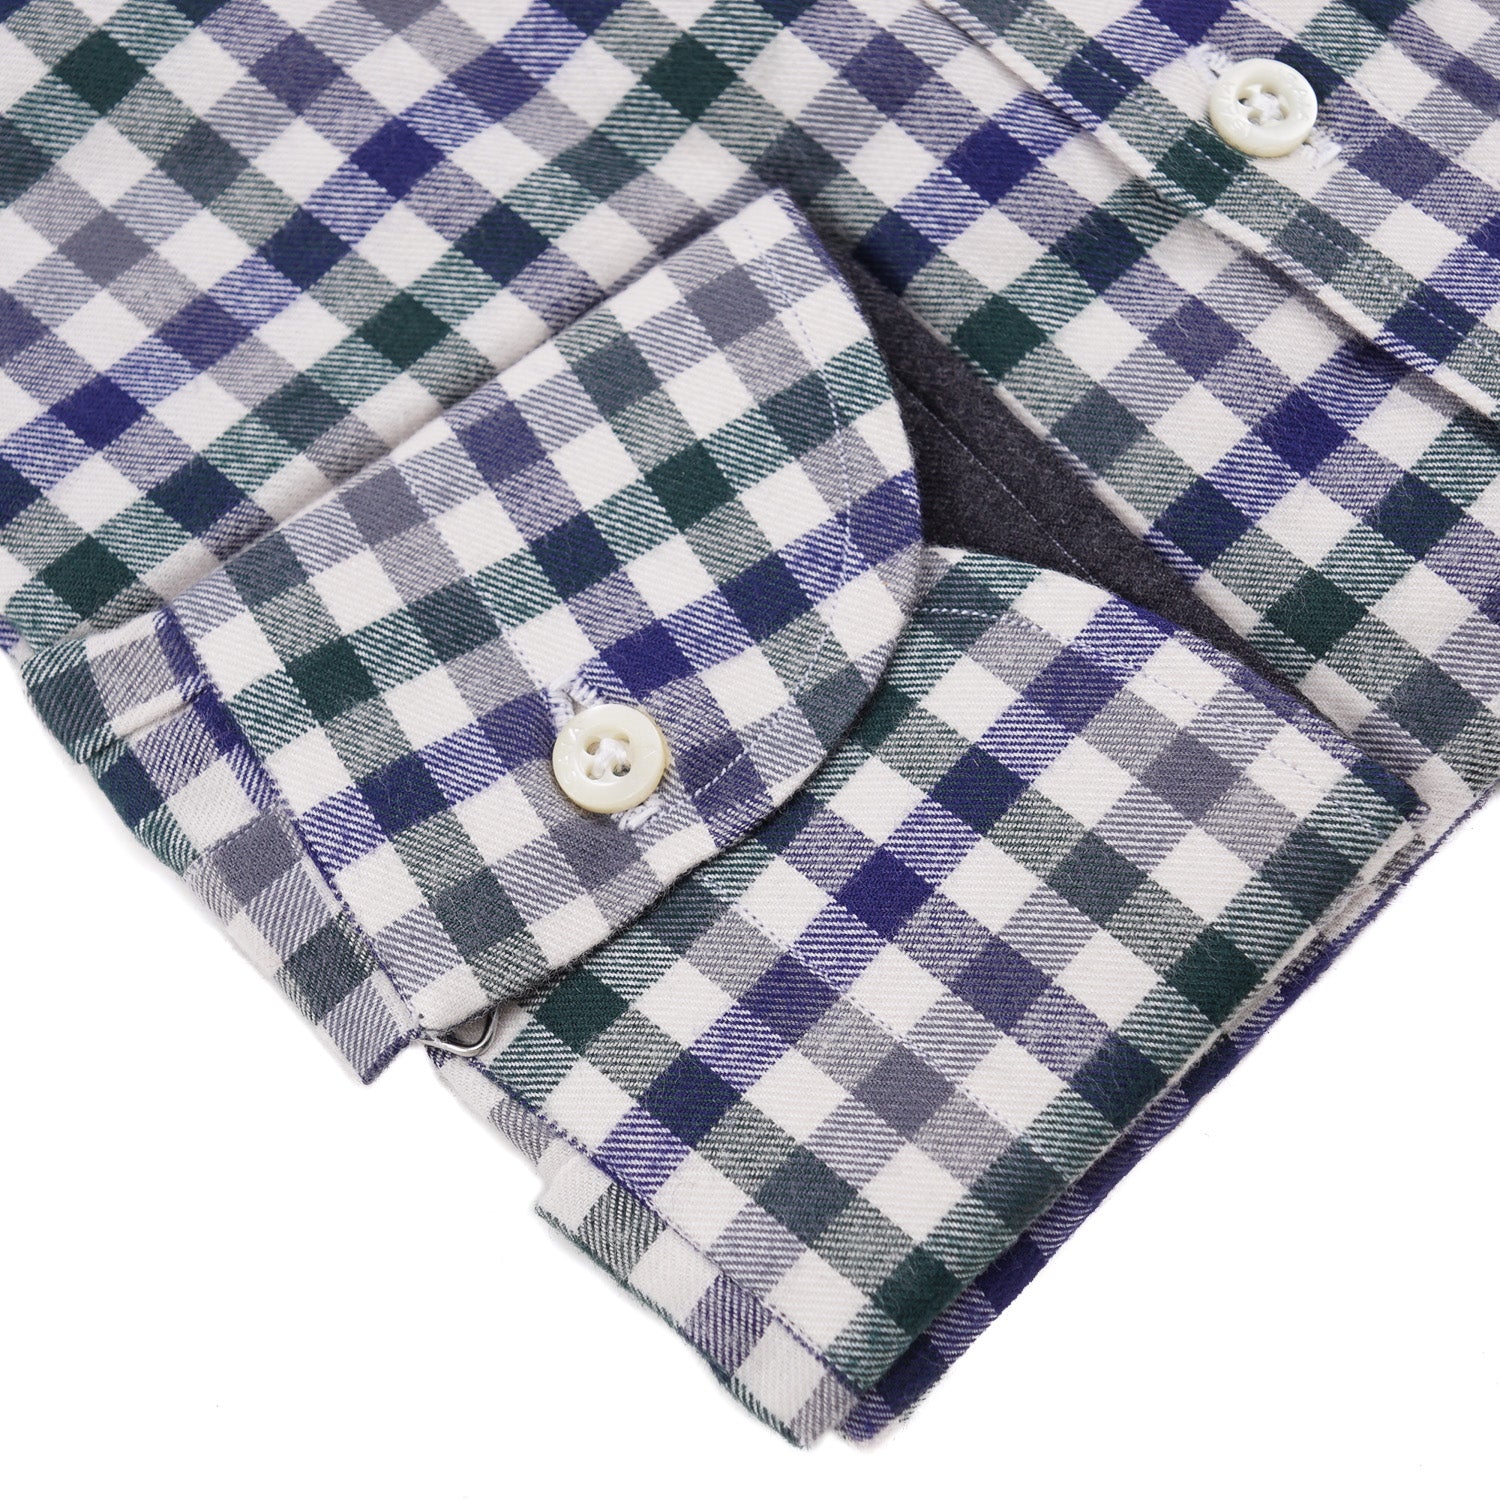 Isaia Modern 'Mix Fit' Soft Flannel Cotton Shirt - Top Shelf Apparel